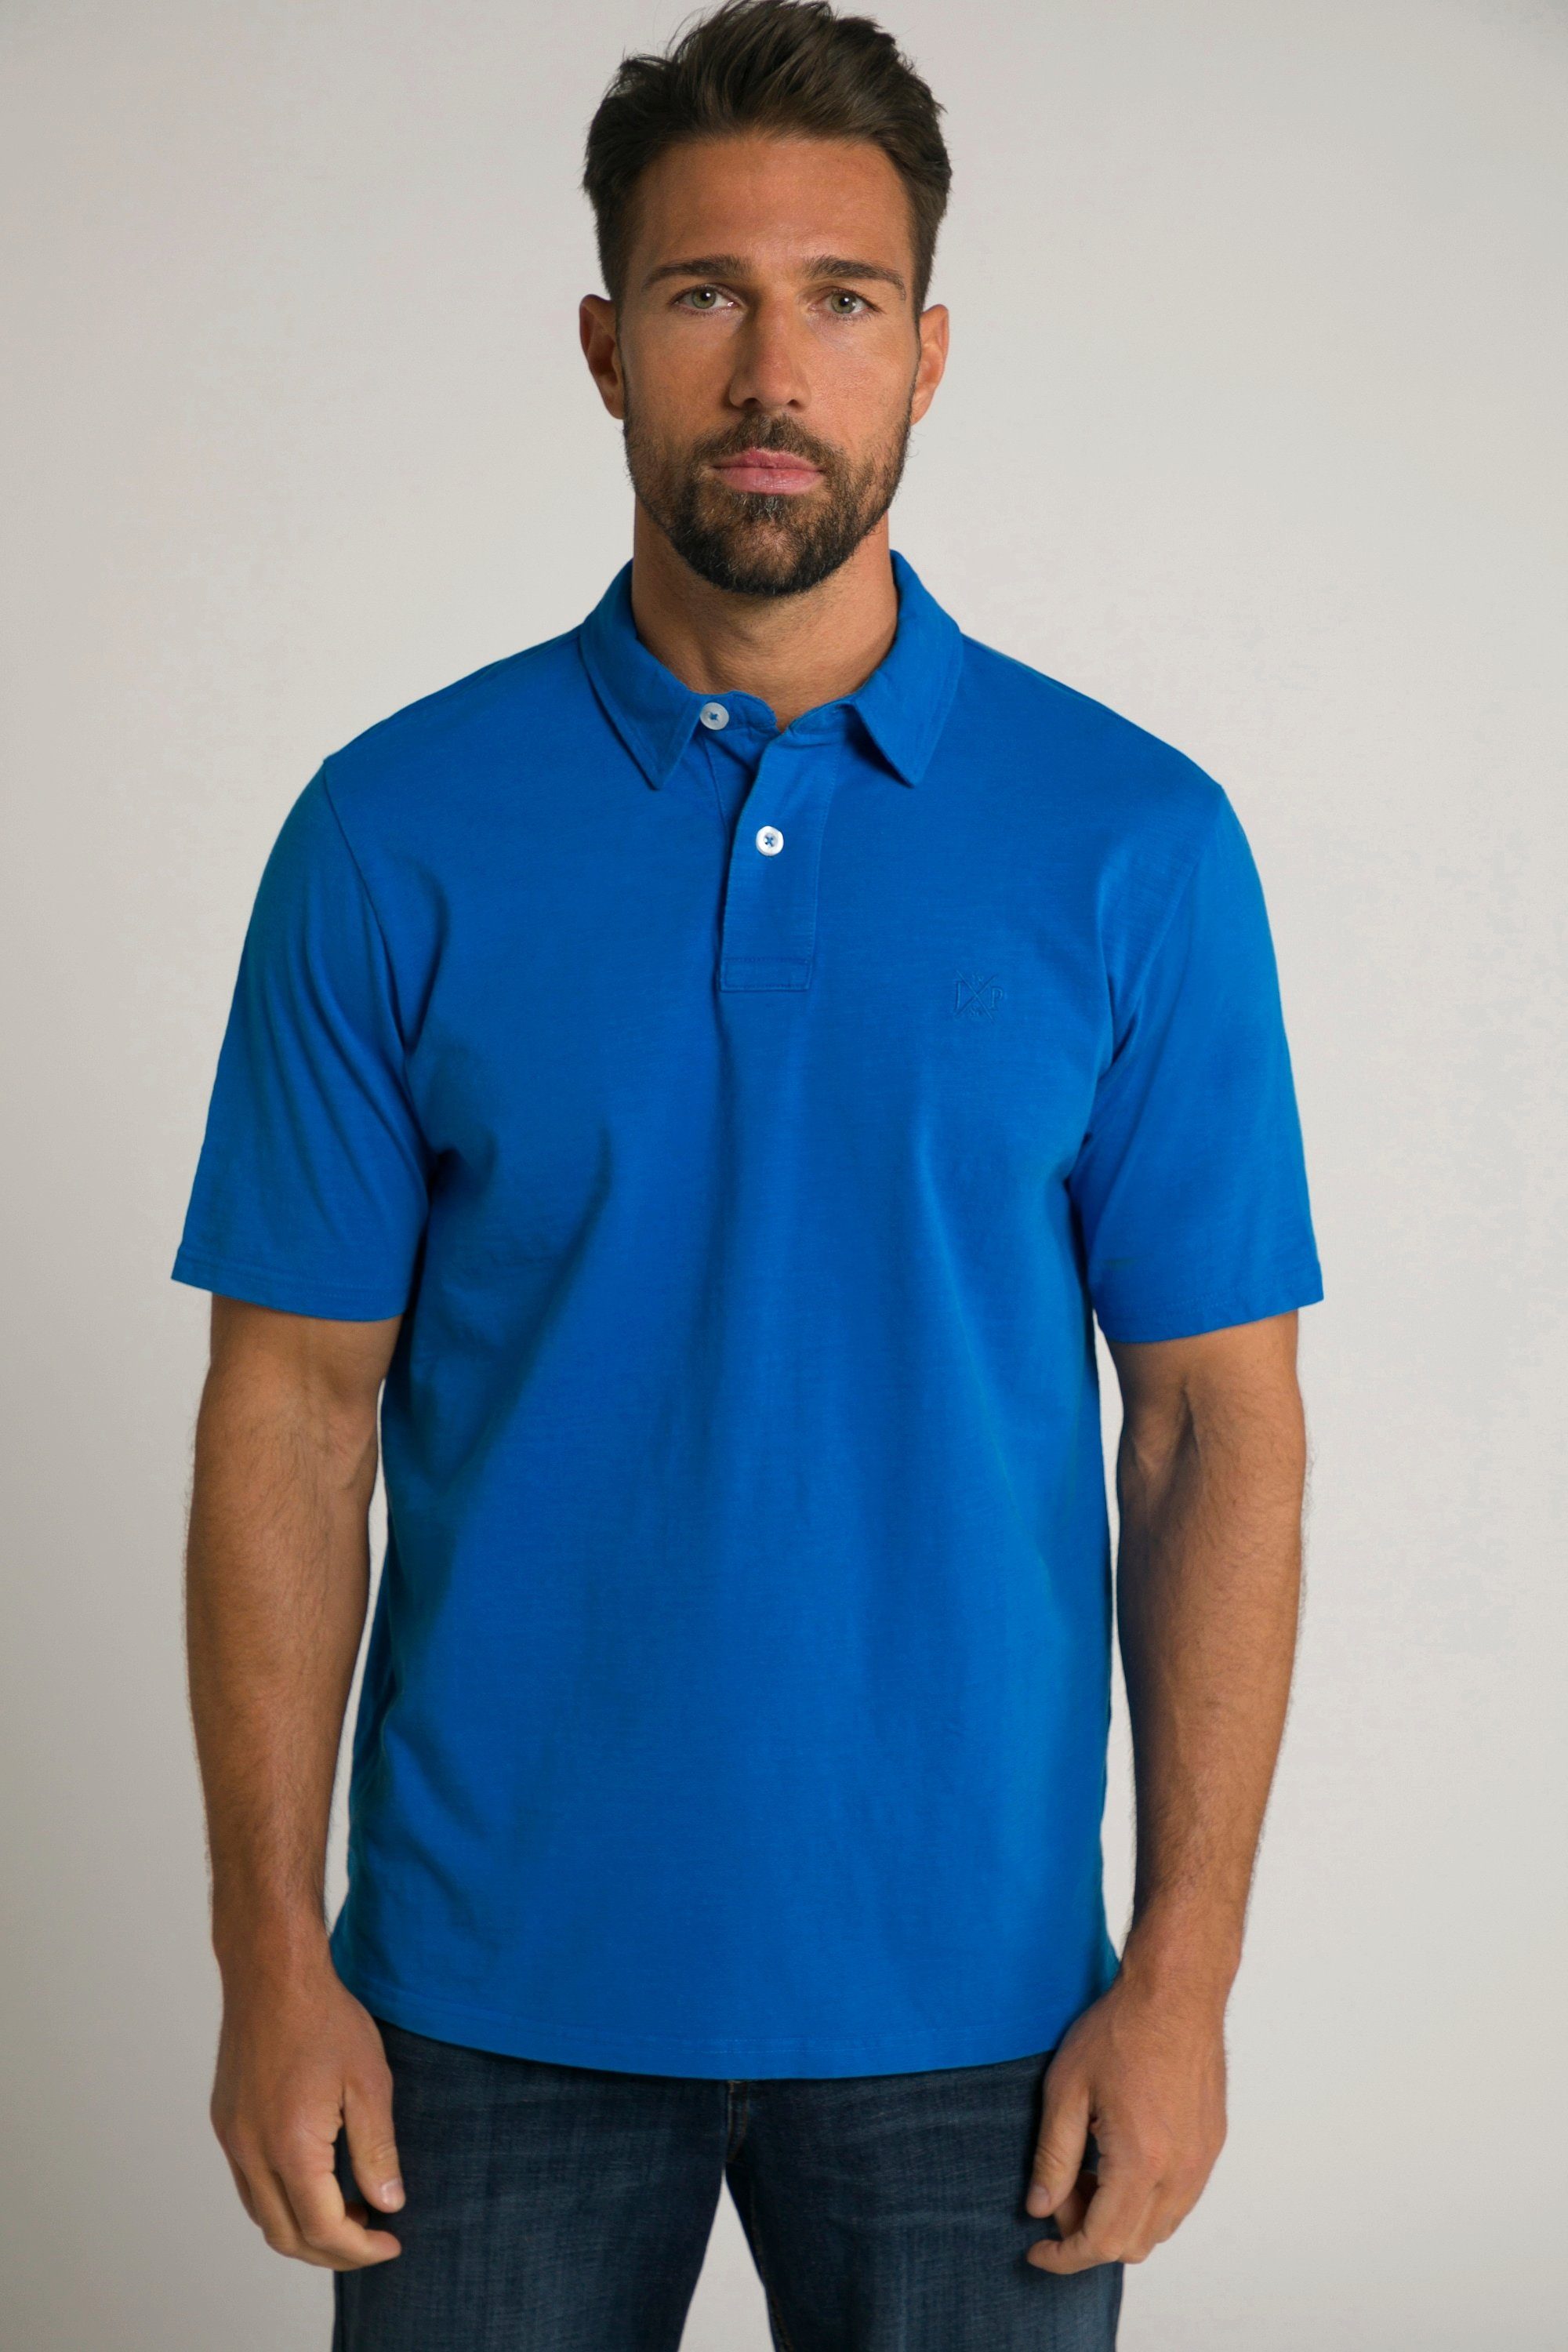 JP1880 Poloshirt Poloshirt Halbarm garment dyed Flammjersey clematisblau